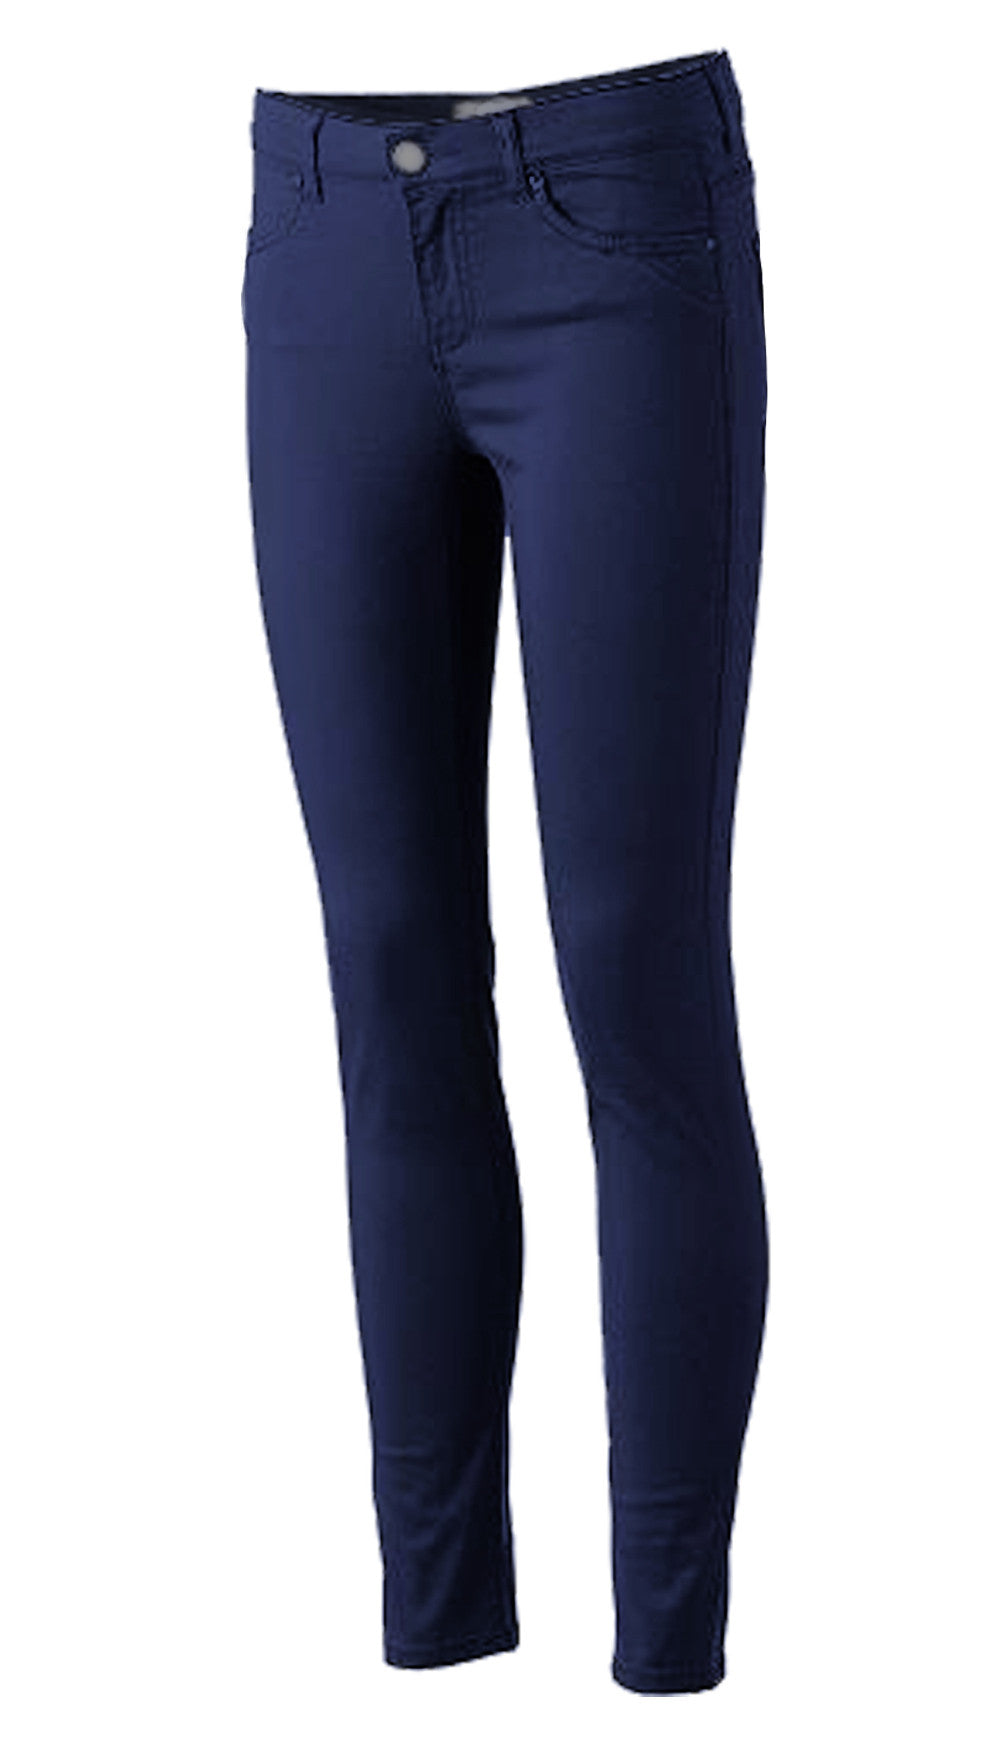 Girls Navy Skinny Pants (Sizes 4-14): Comfy cotton blend with 3% spandex. Adjustable waist for ideal fit. Sleek skinny leg. Colors: Navy, Khaki, Black. Style: LGSK80.